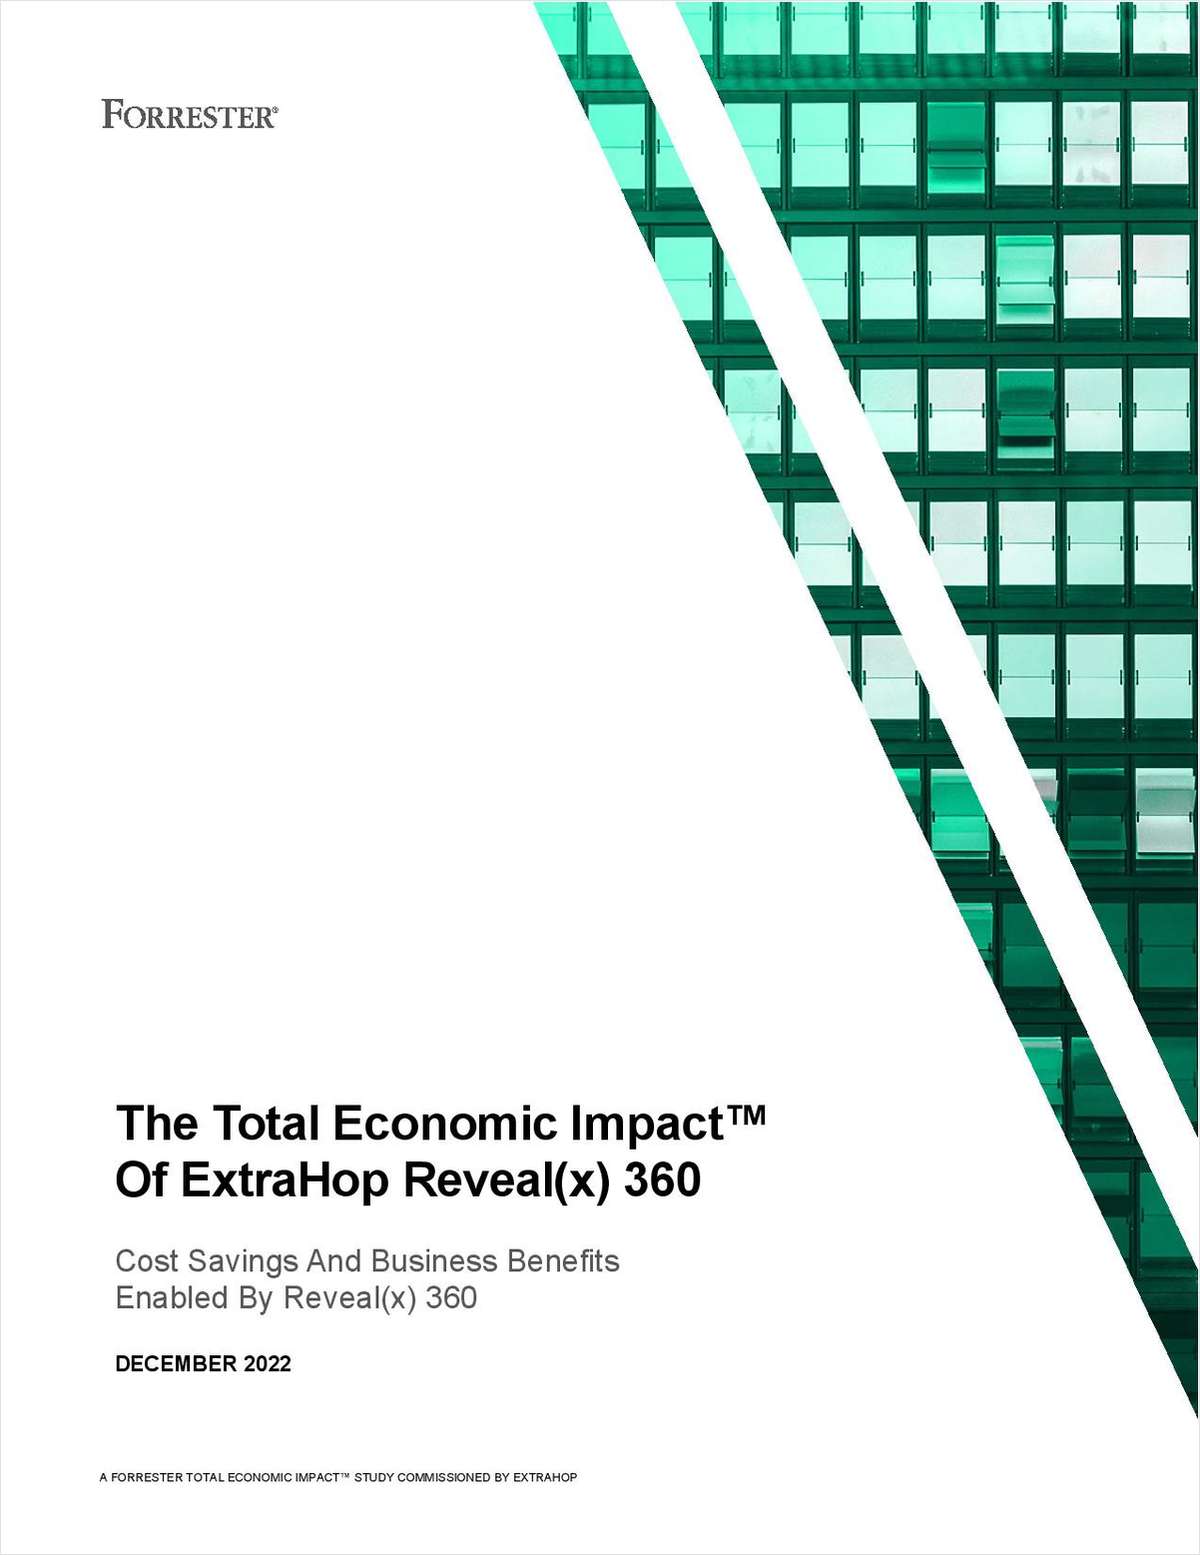 The Total Economic Impact of ExtraHop Reveal(x) 360